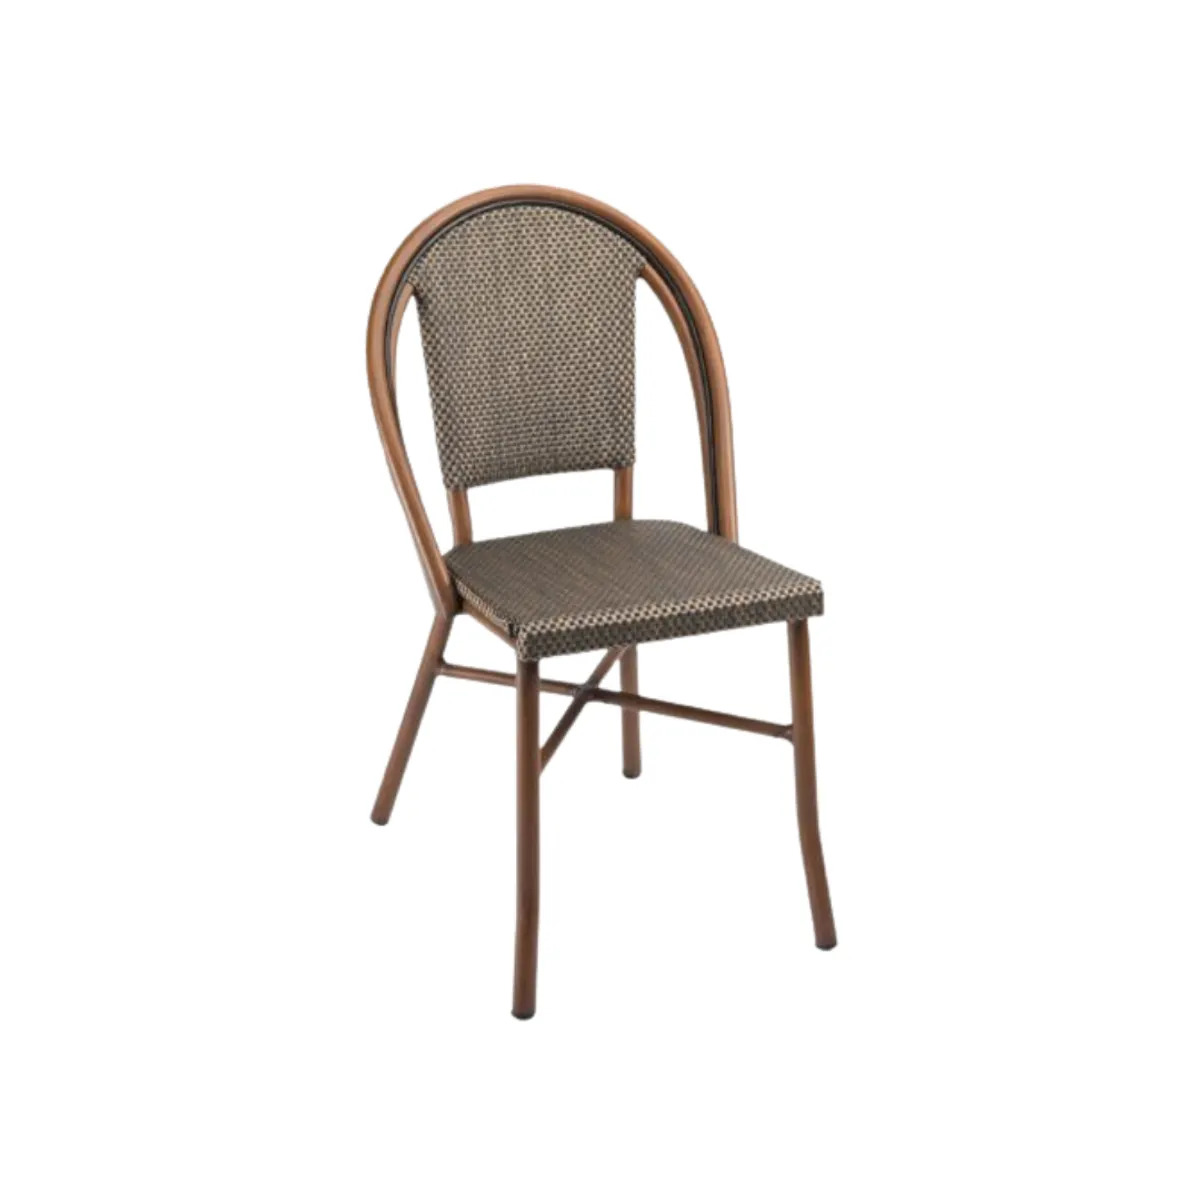 Cahill side chair 3